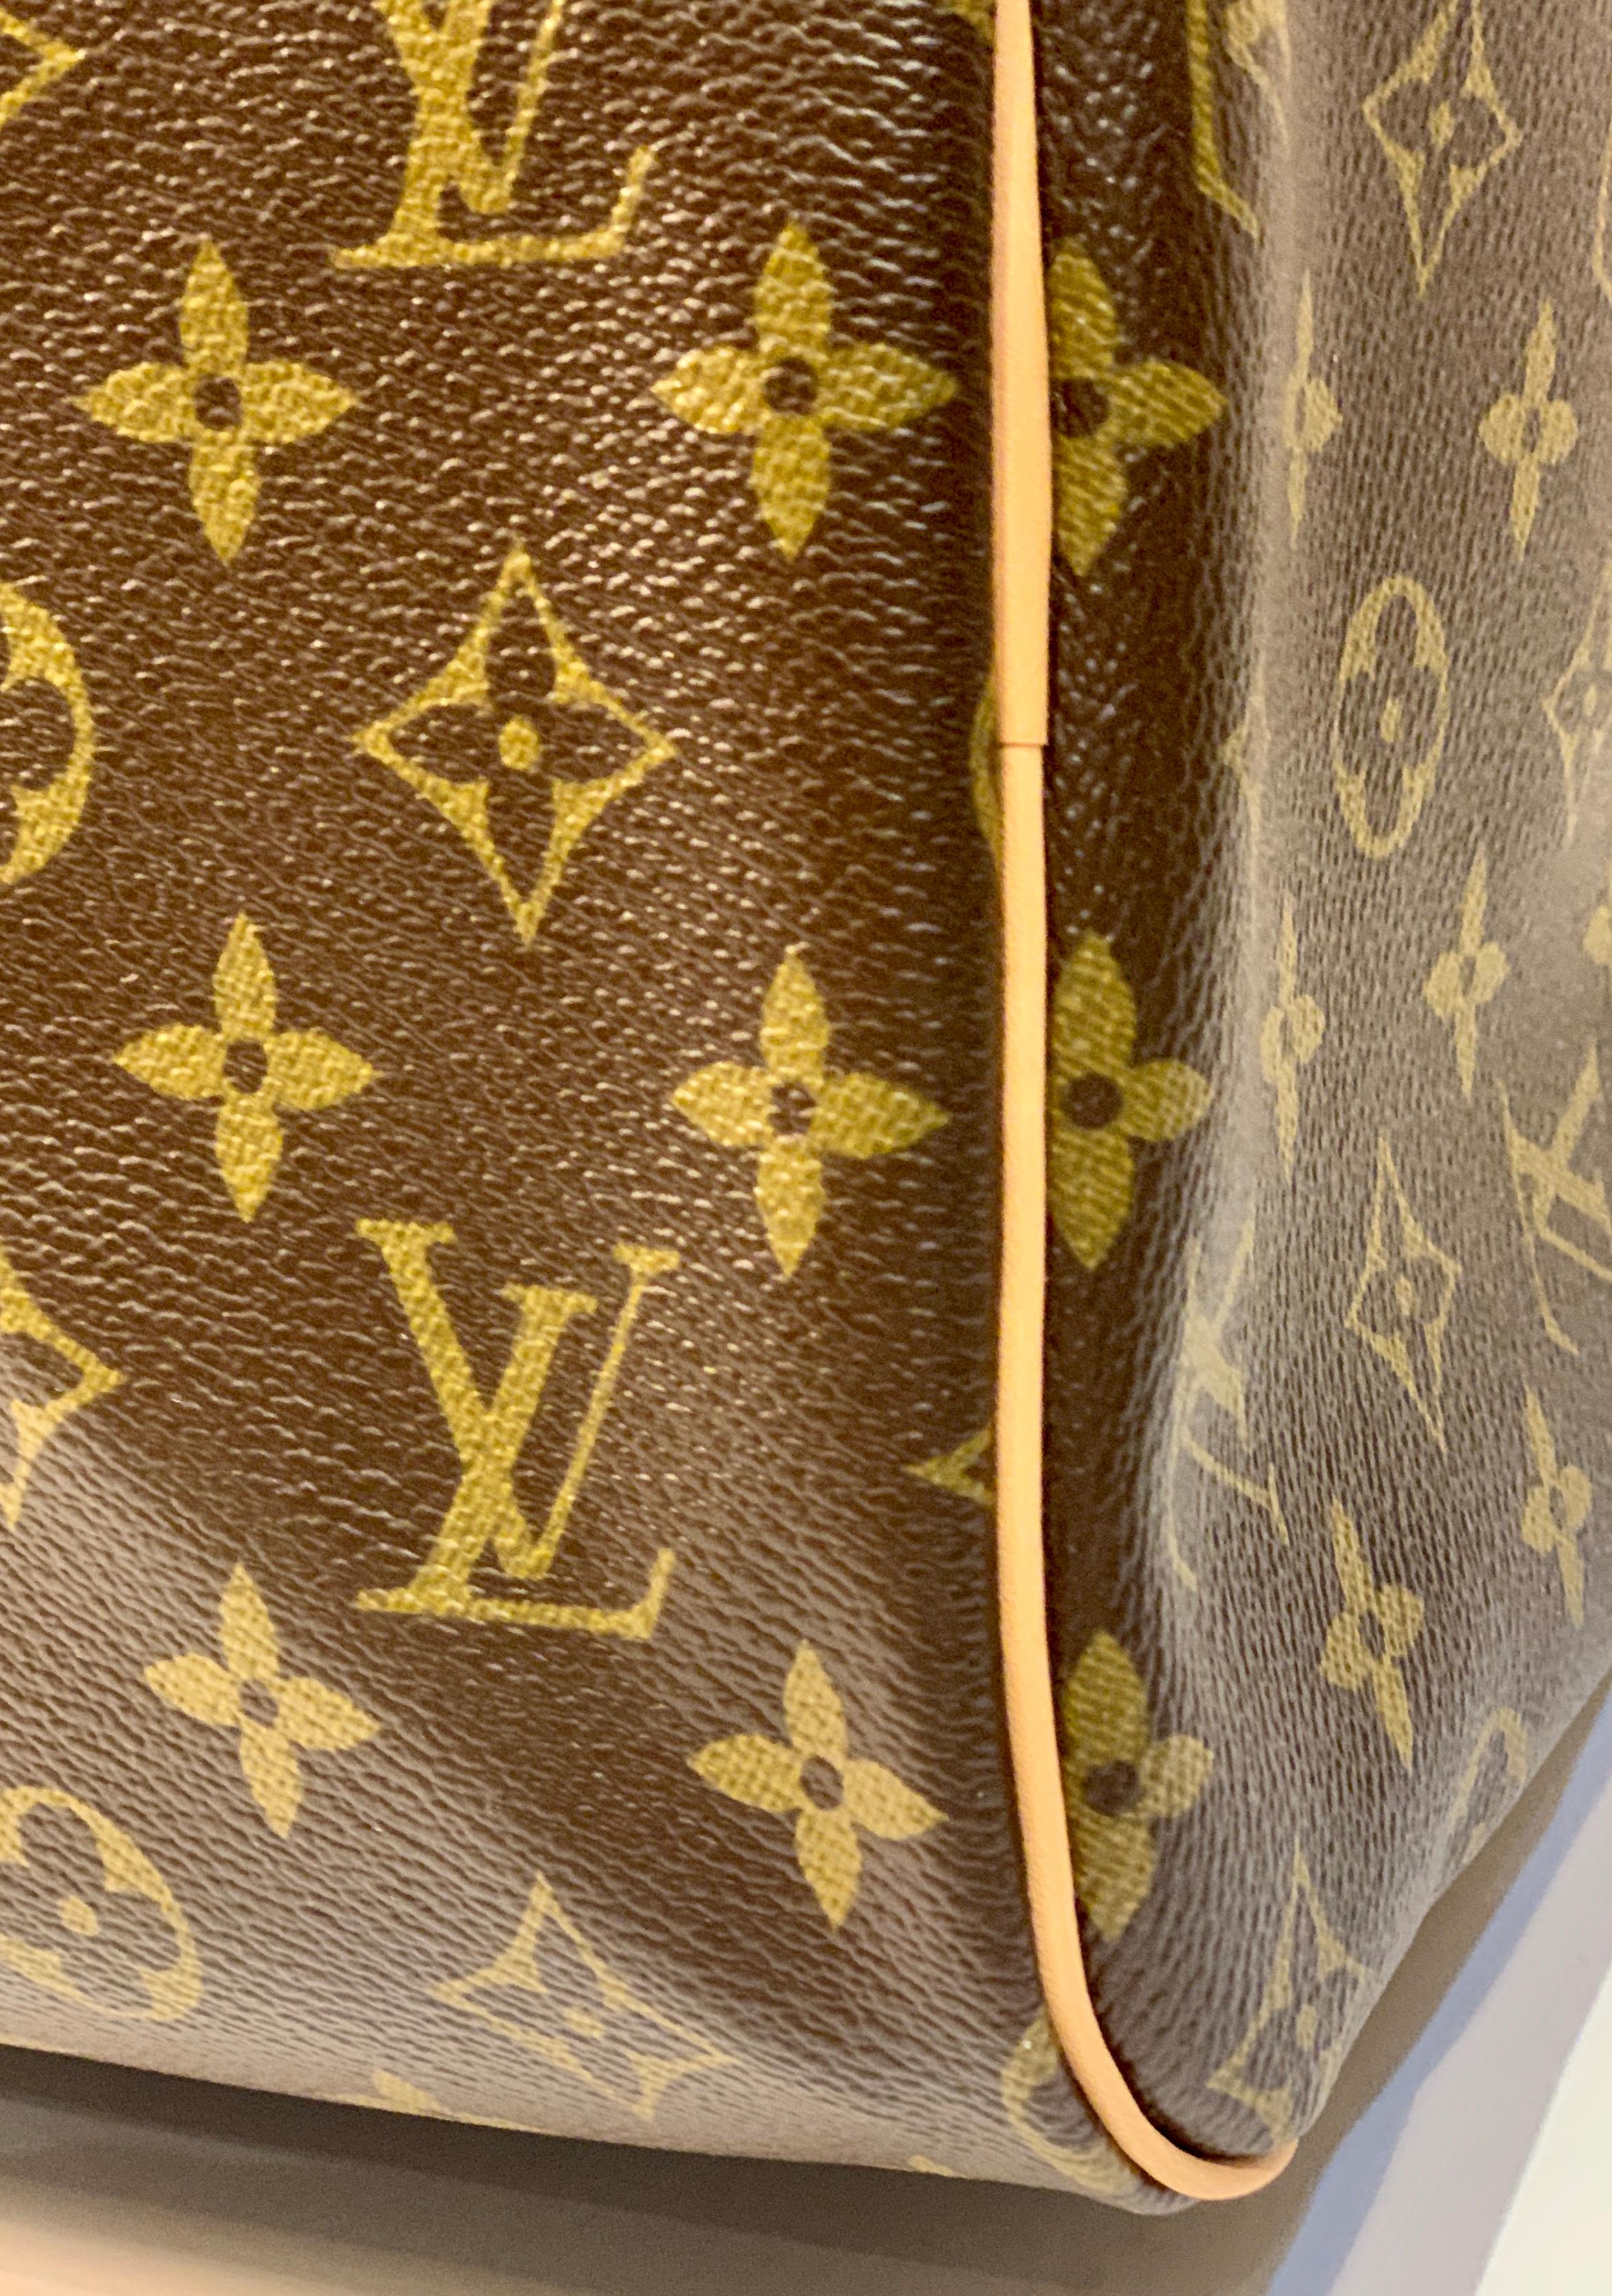 Iconic Louis Vuitton Speedy 30 Handbag Limited Edition Grenade V Monogram Canvas 1